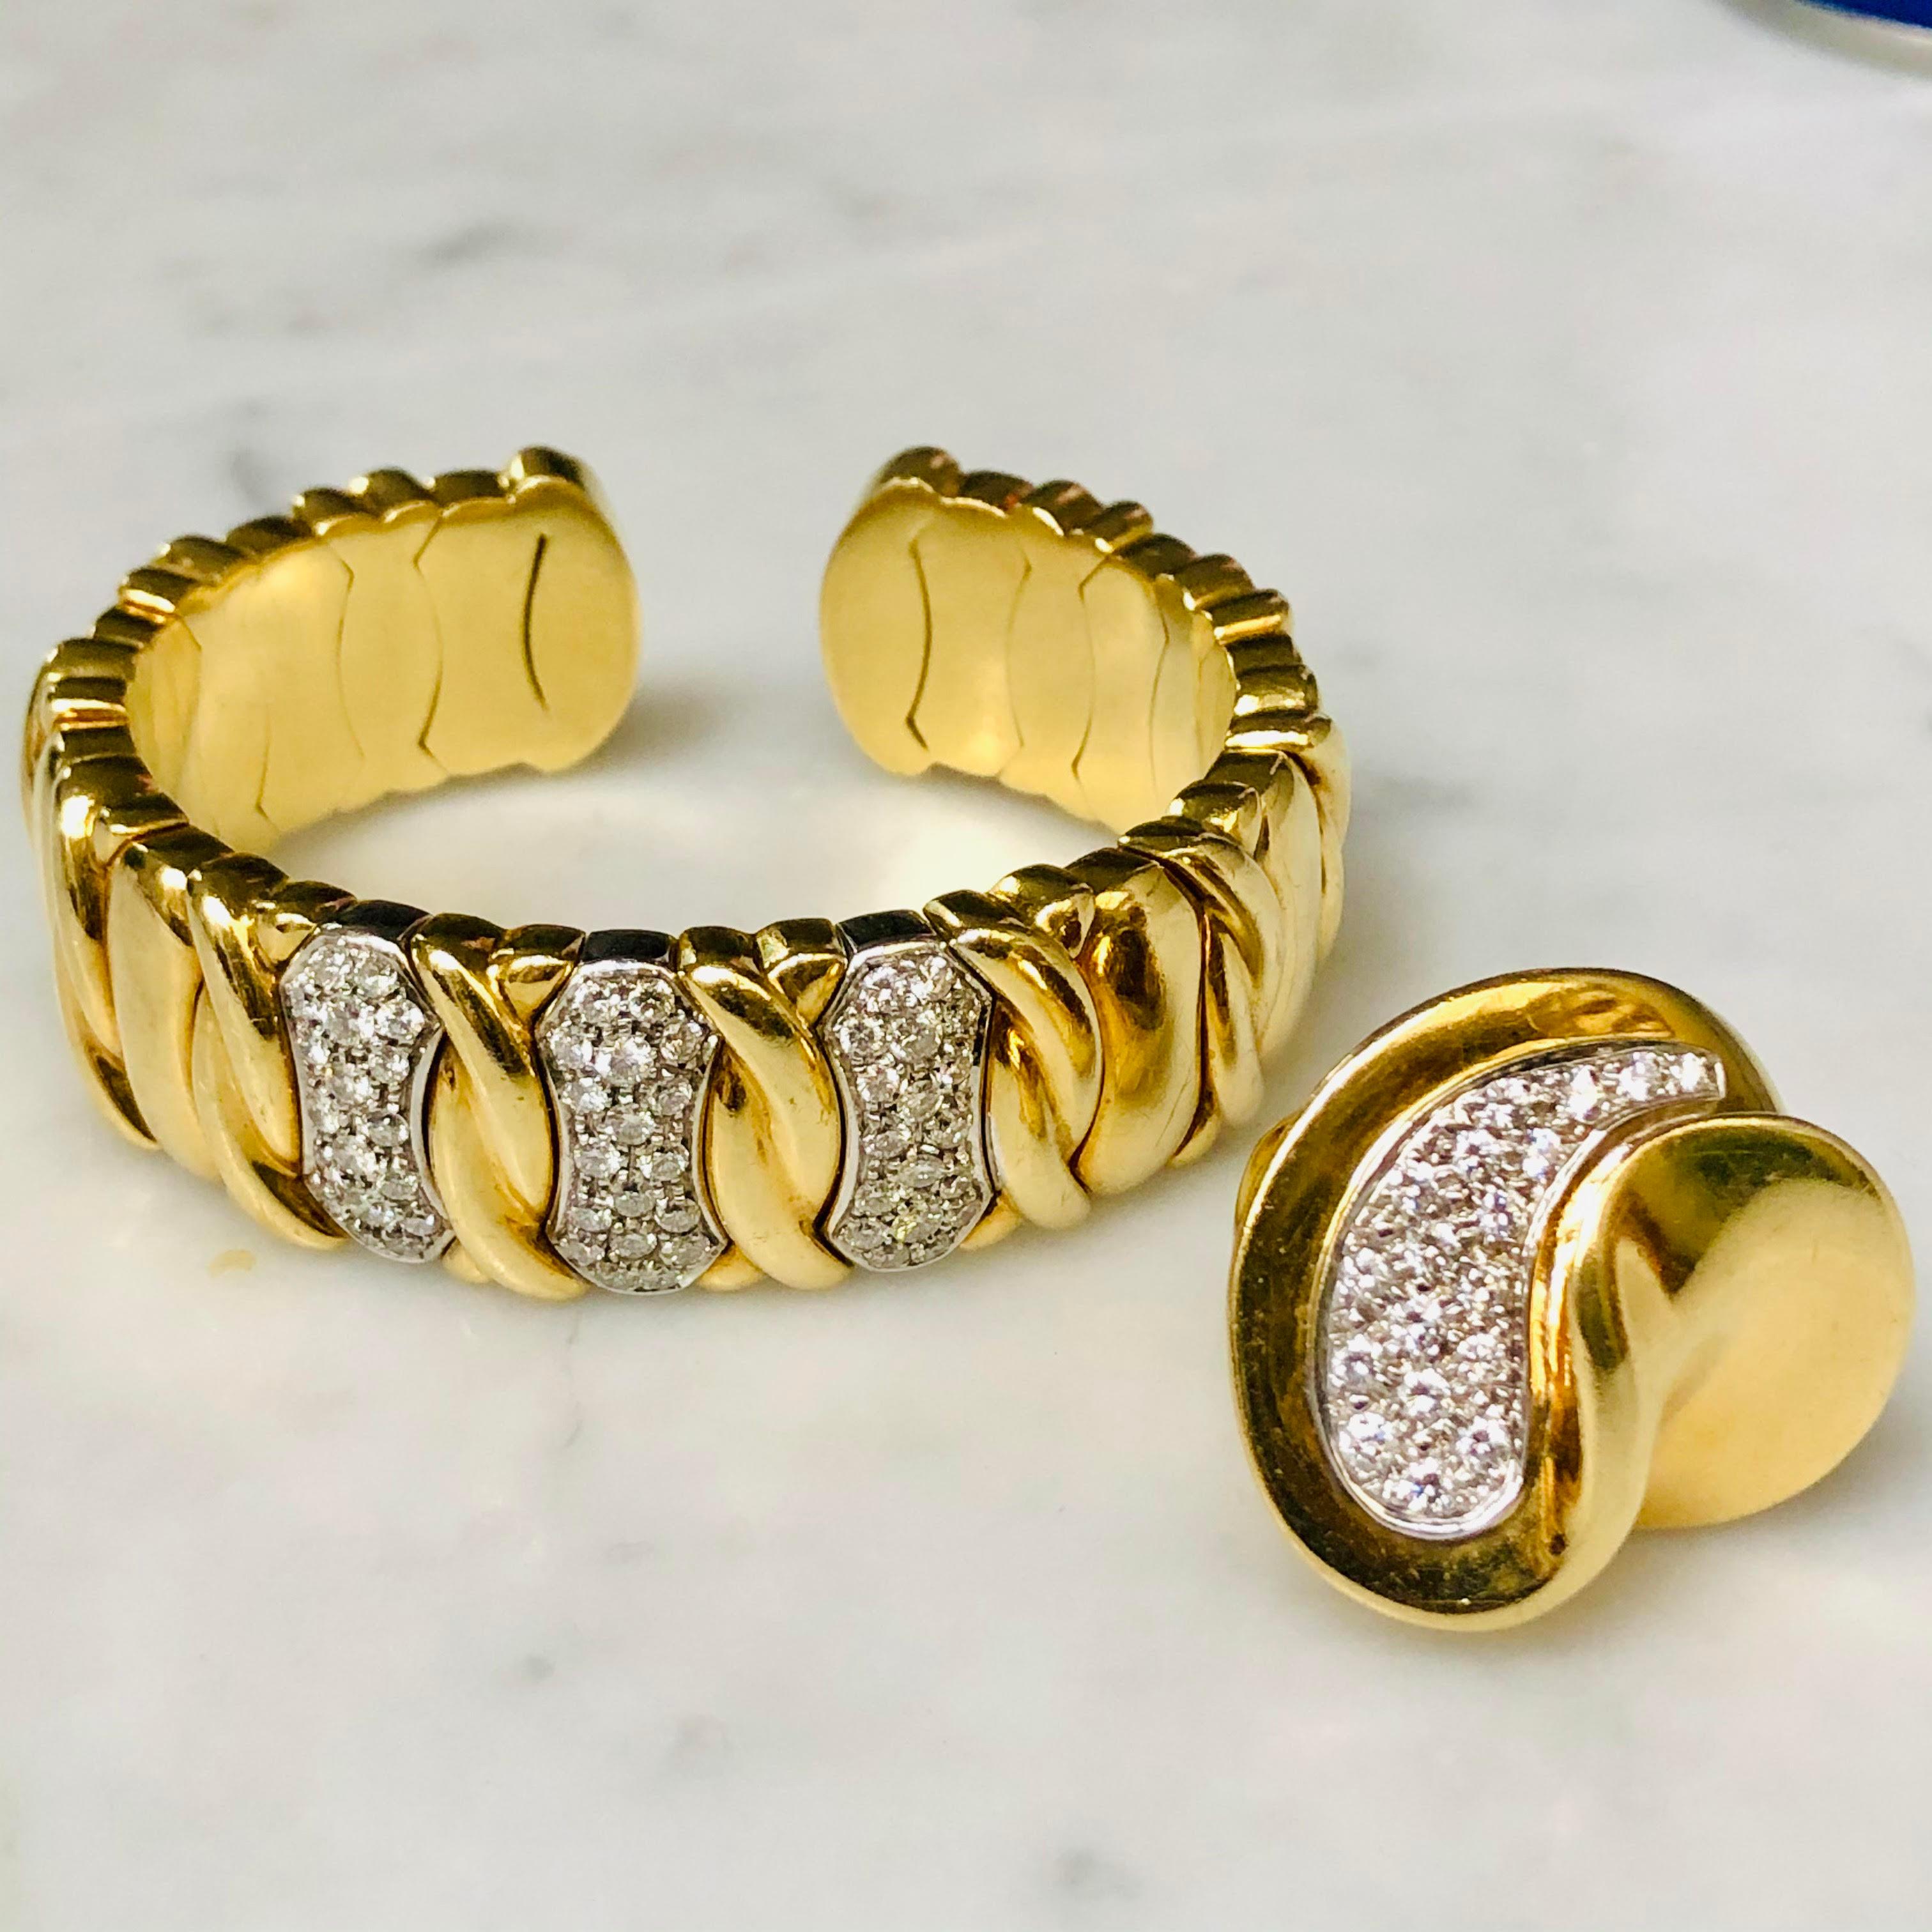 Women's Gold and Diamond Sculptural Cocktail Ring, 18 Karat Yellow Gold